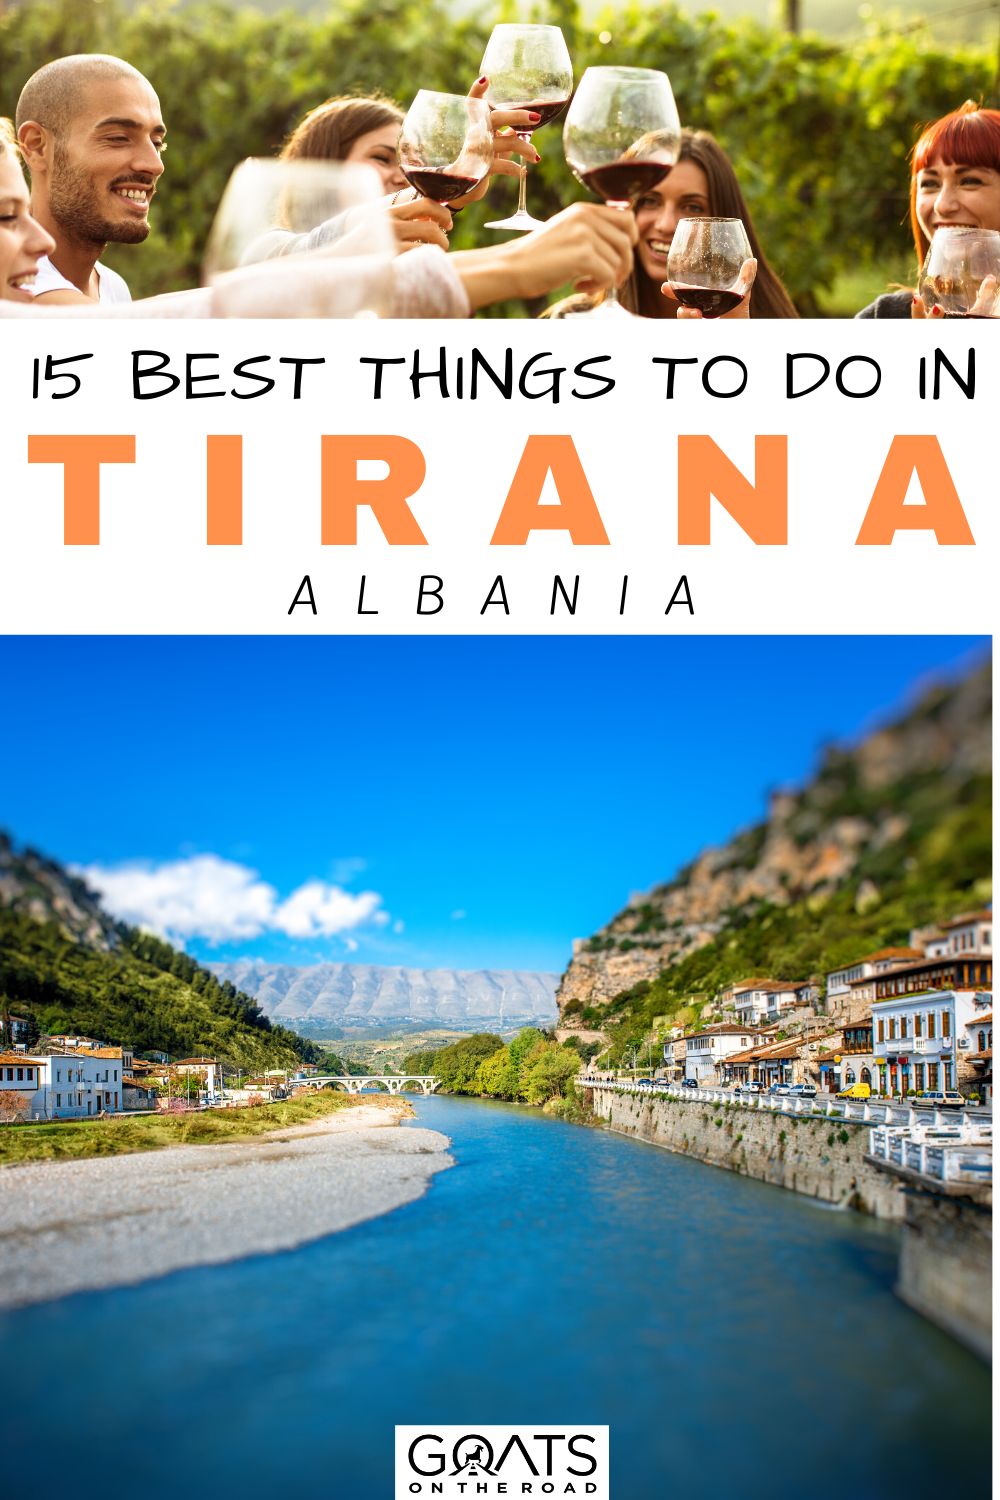 “15 Best Things To Do in Tirana, Albania